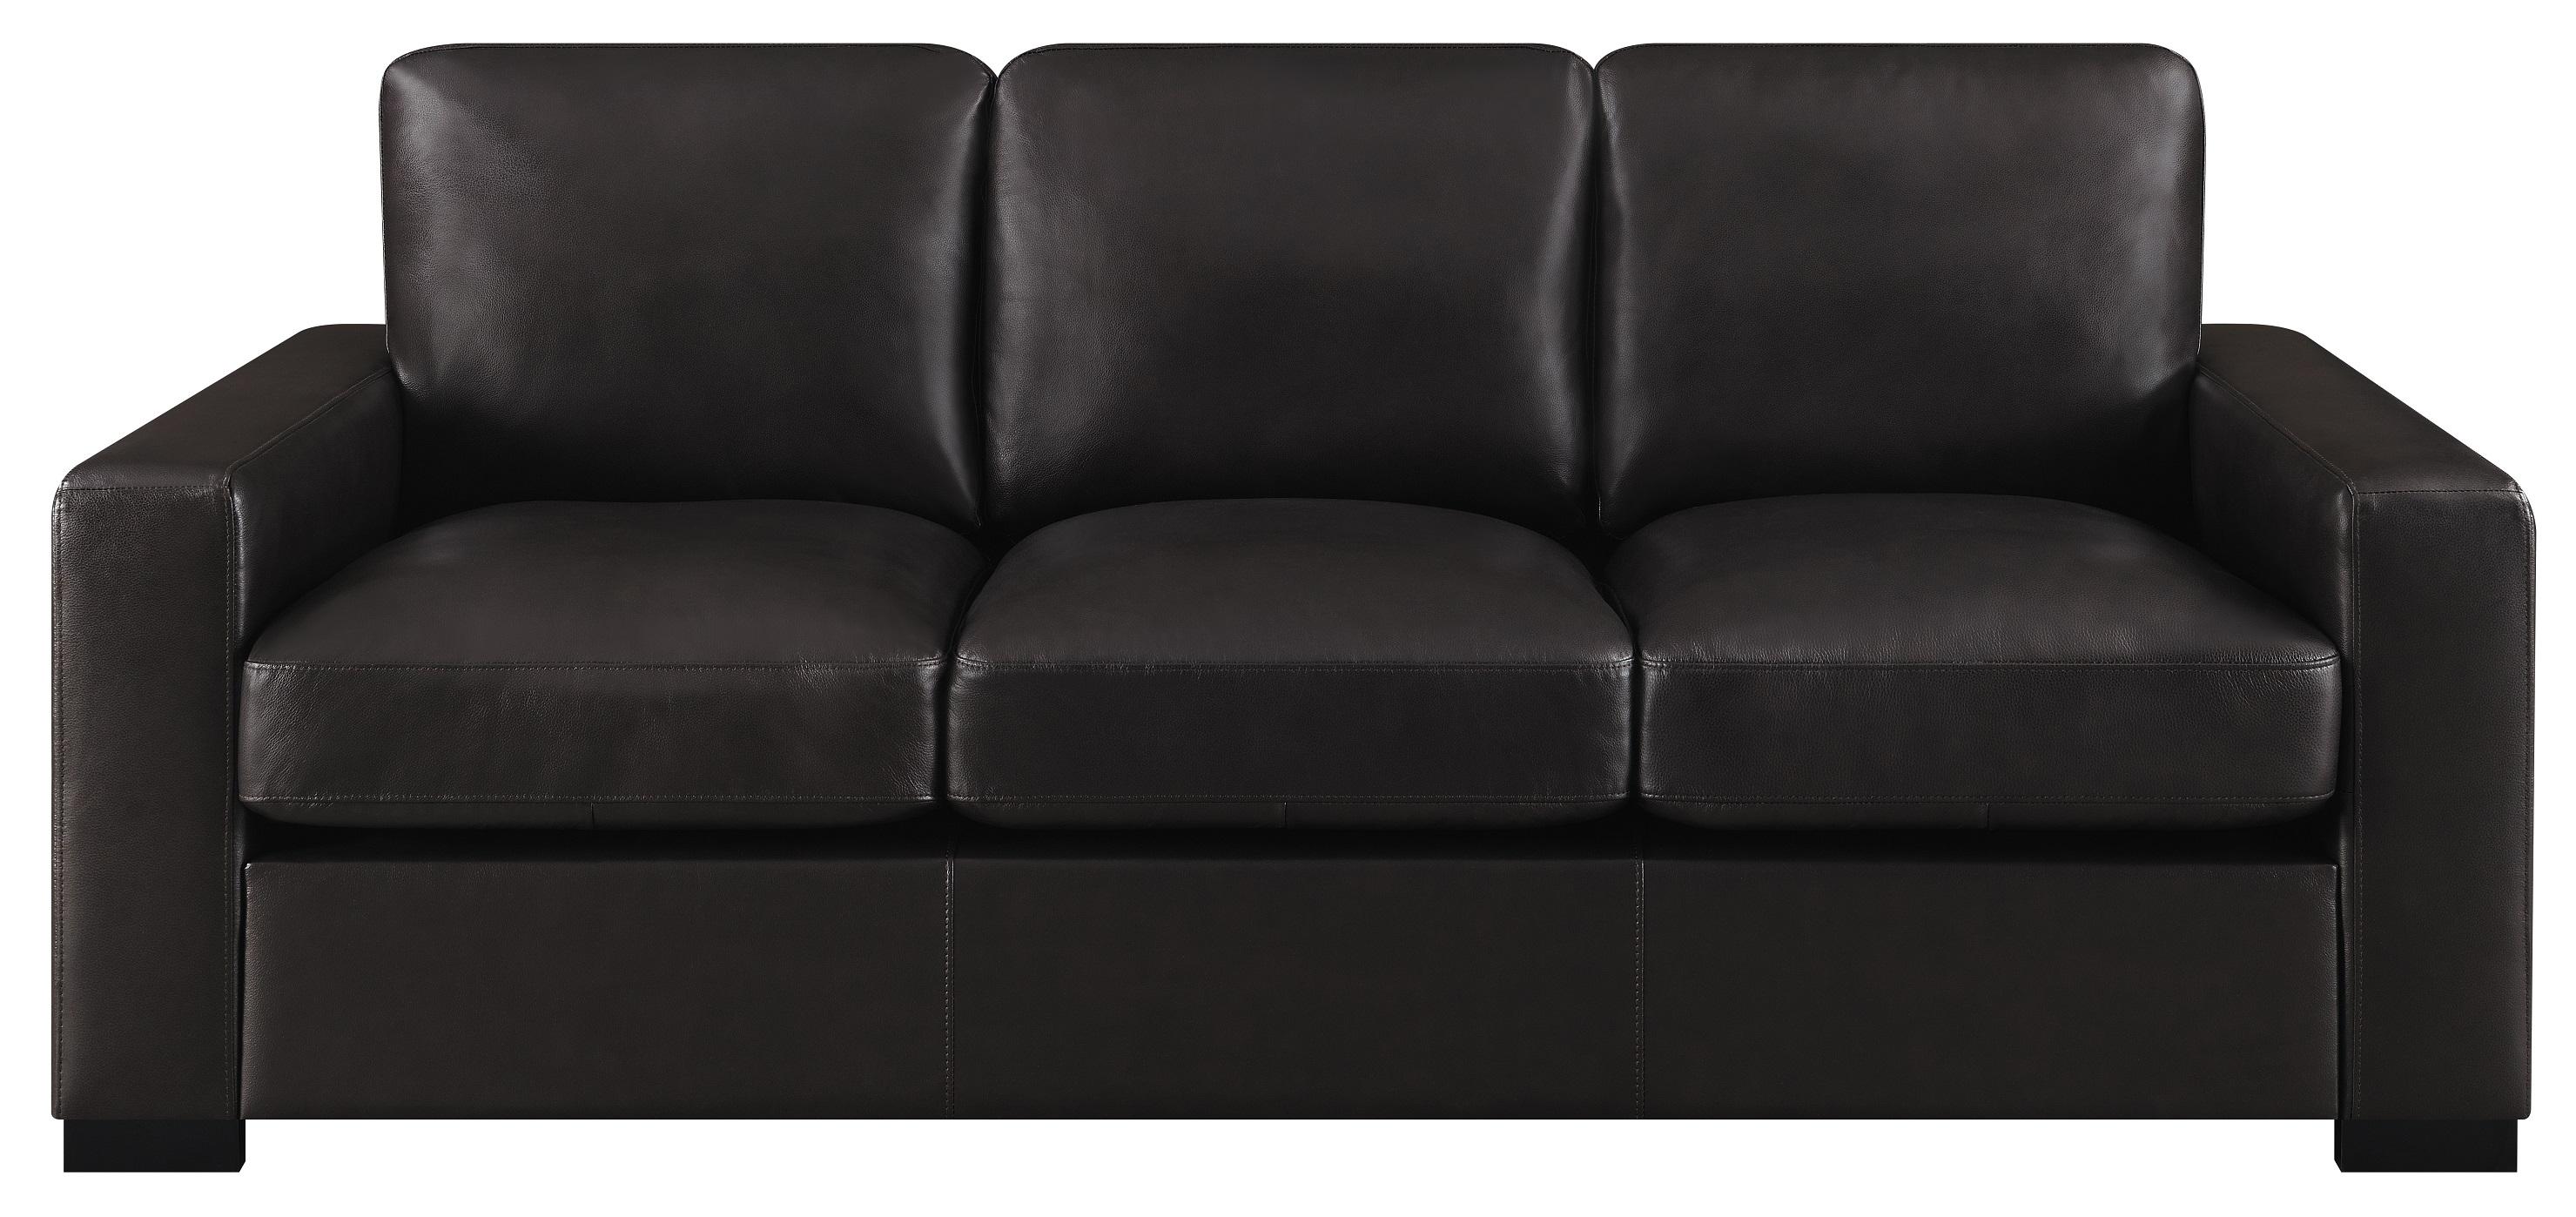 

    
Modern Dark Brown Leather Living Room Set 3pcs Coaster 506801-S3 Boardmead
